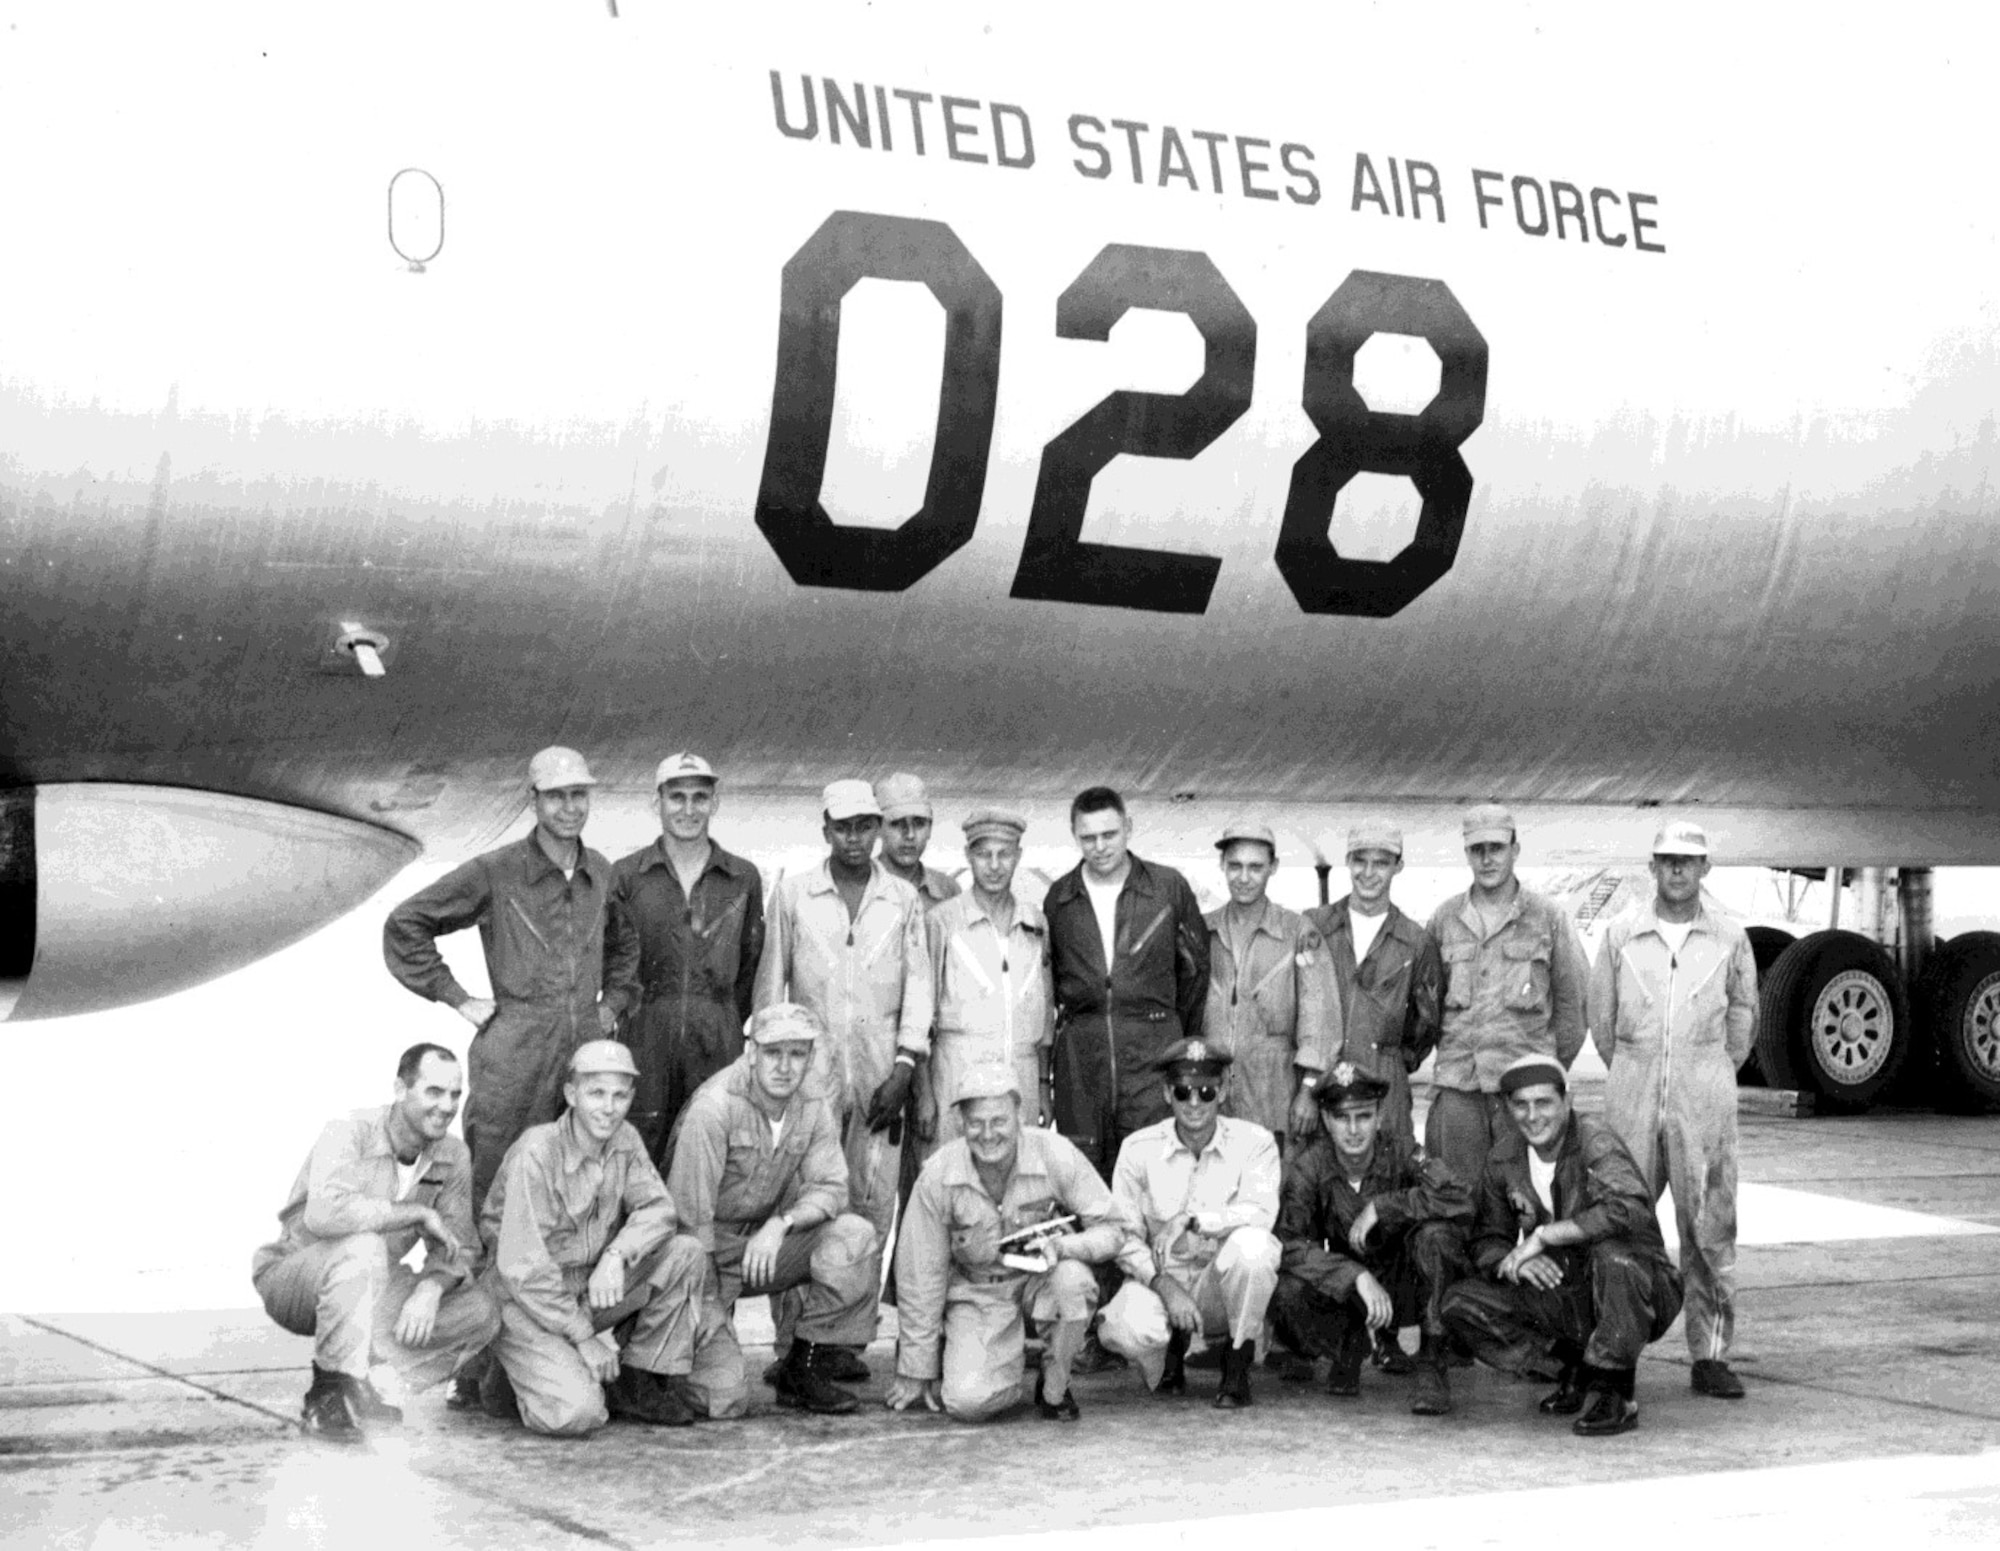 B-36 historical photo